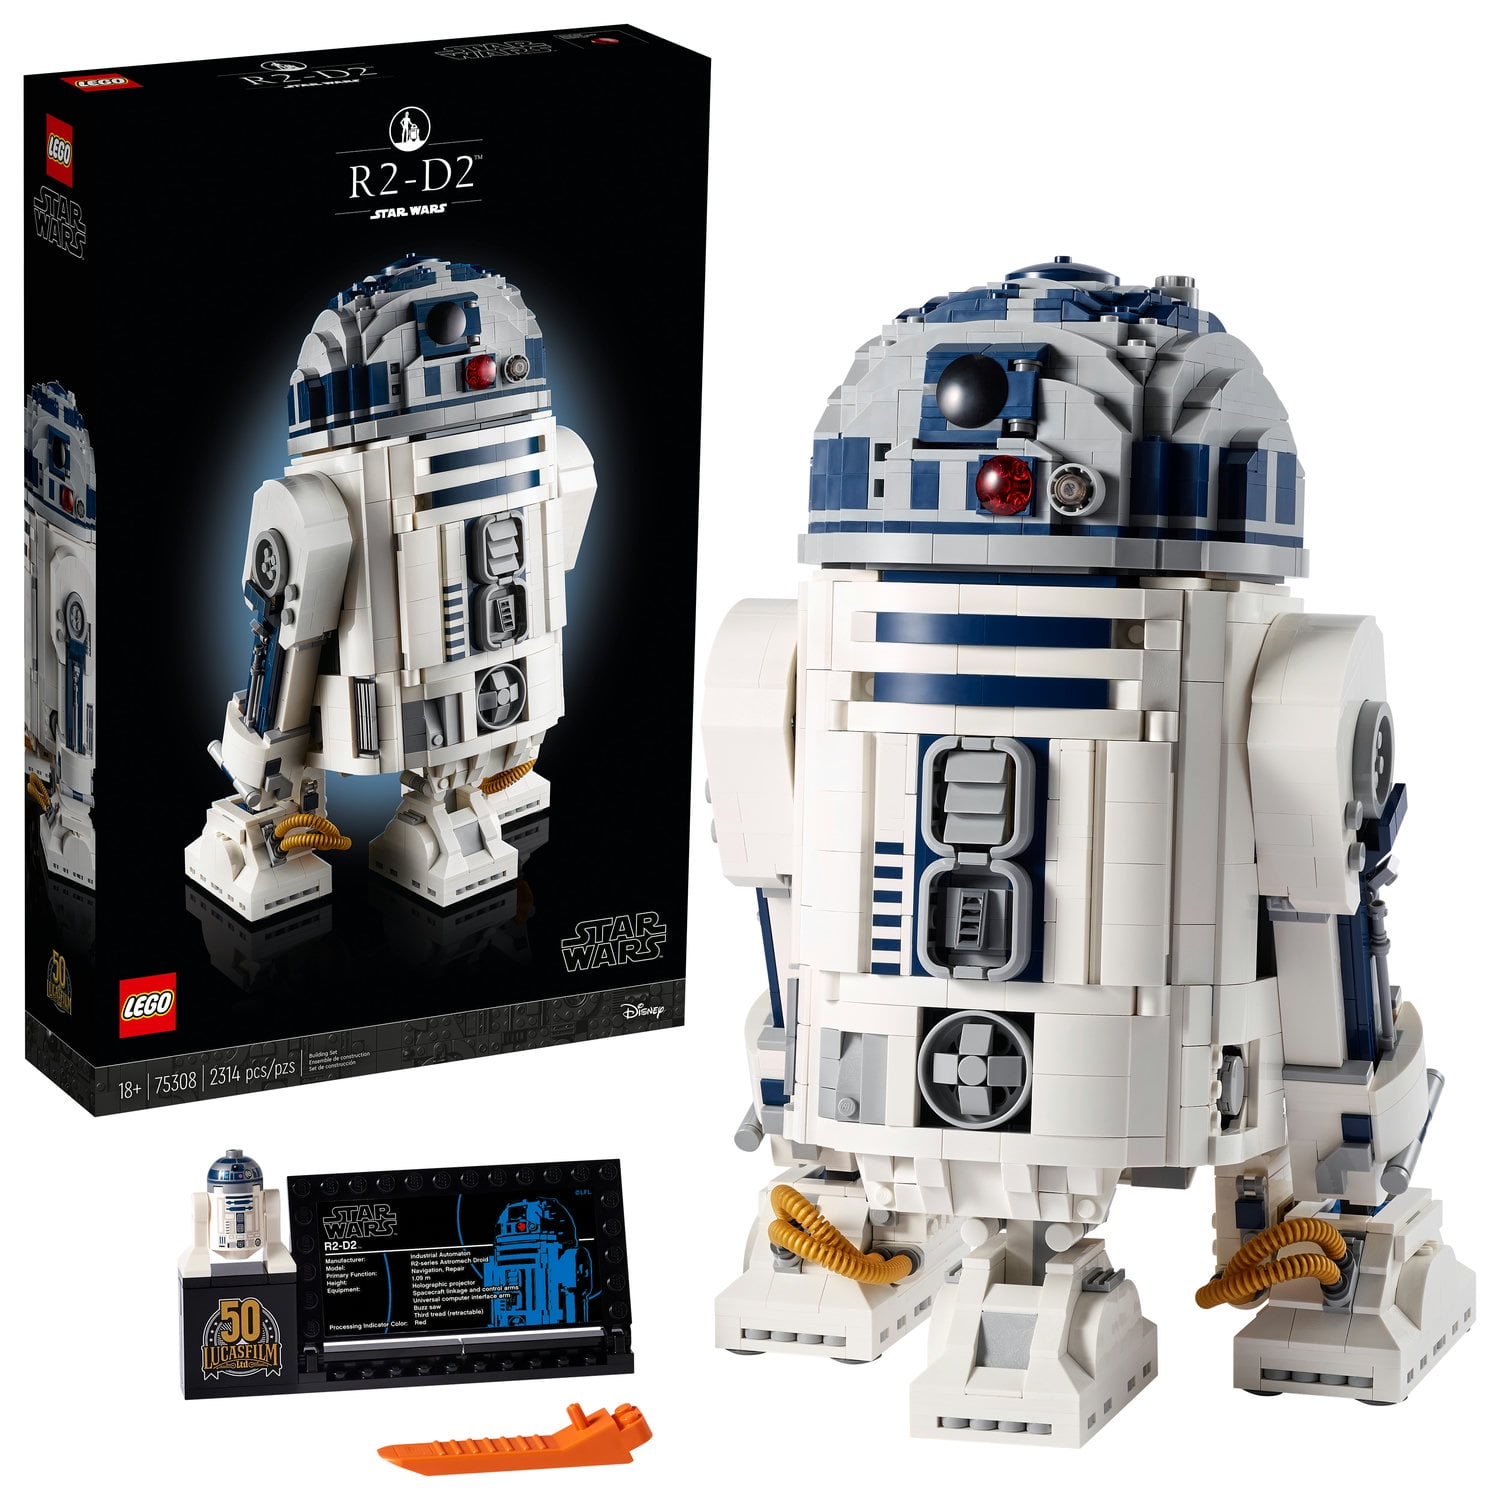 R2D2 Star Wars The Last Jedi Robot Sale Toys Kids Gifts Building Blocks New 2019 